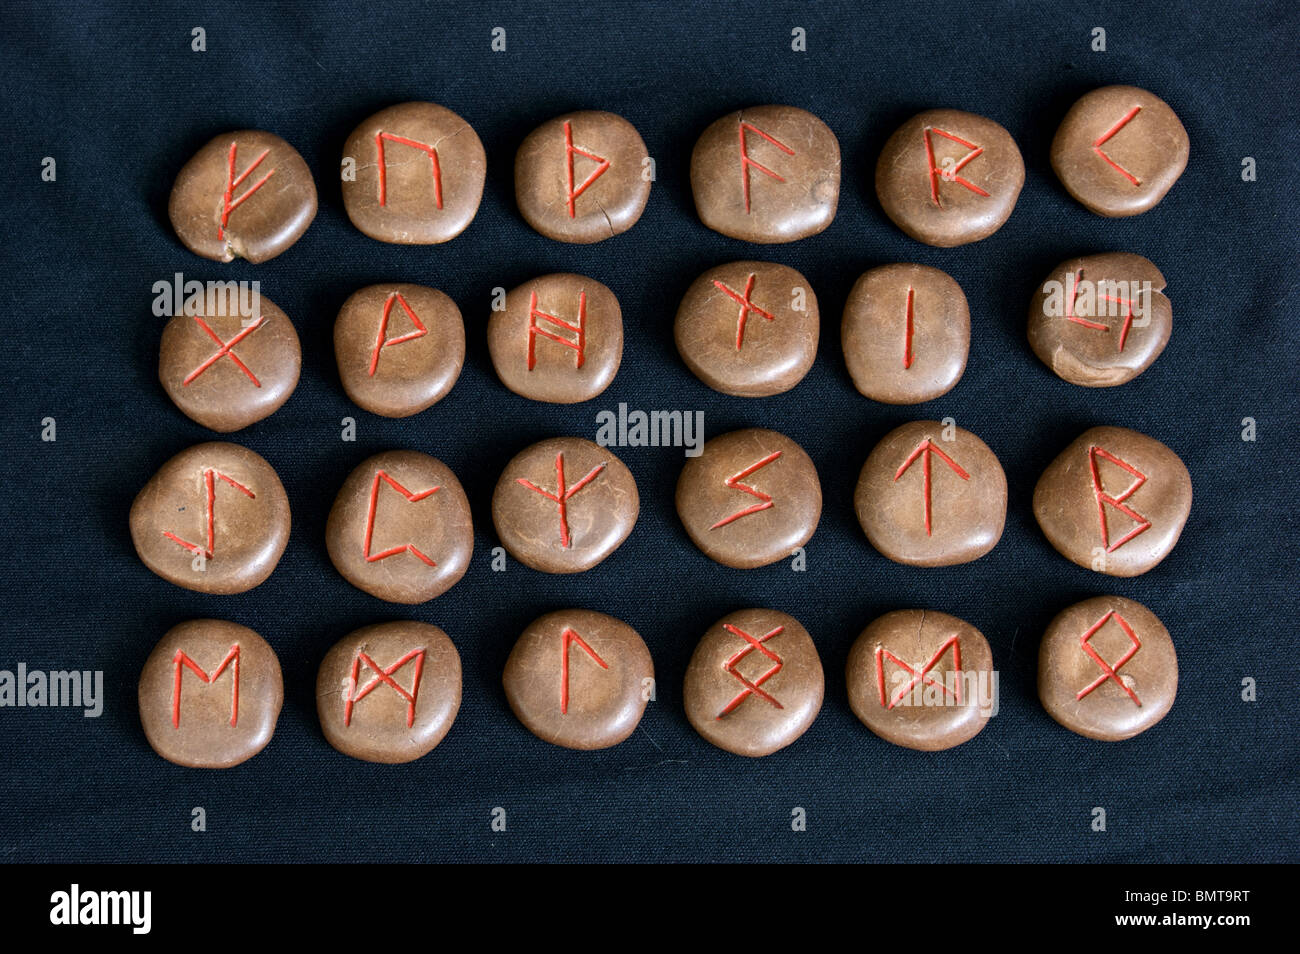 Germanic Runes Alphabet